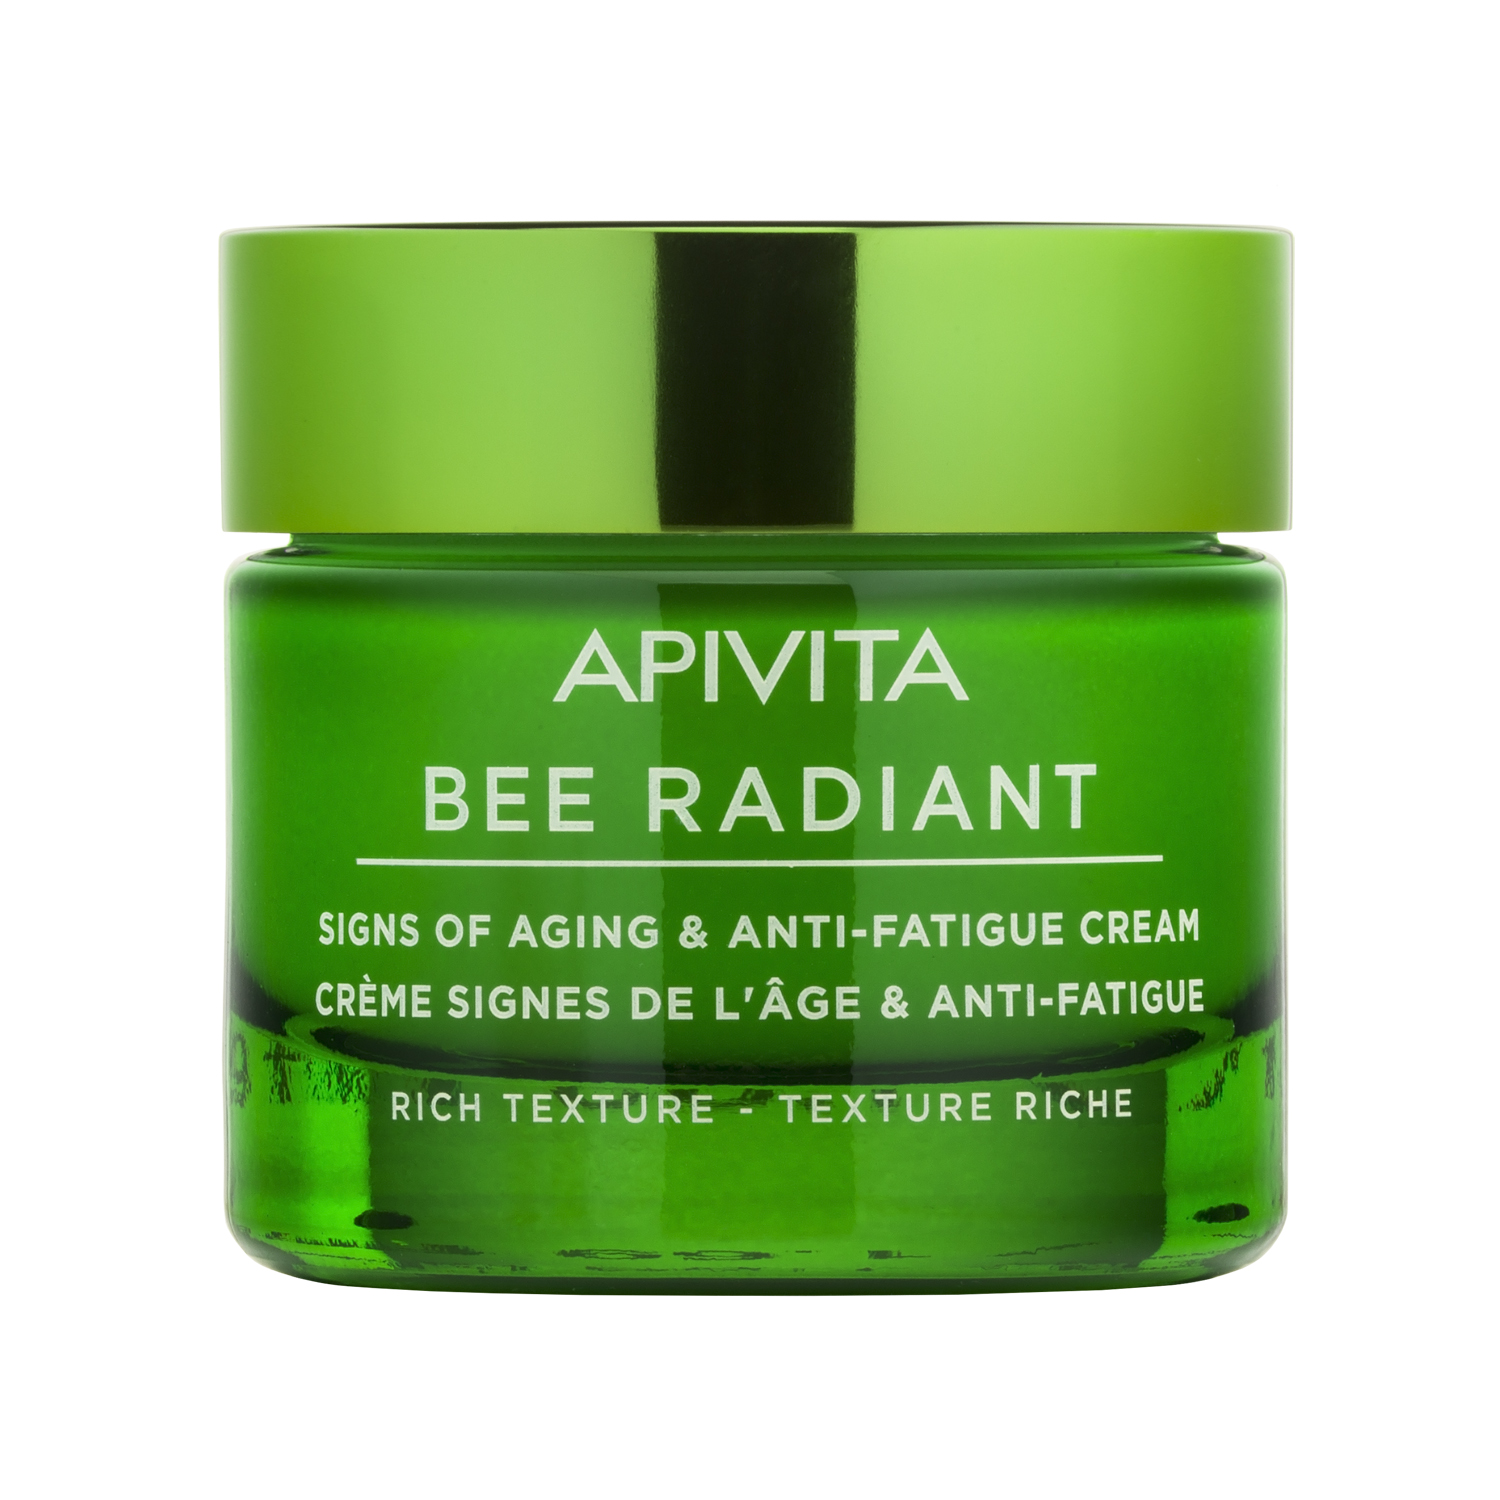 Apivita Крем с насыщенной текстурой, 50 мл (Apivita, Bee Radiant) крем с насыщенной текстурой bee radiant apivita апивита банка 50мл